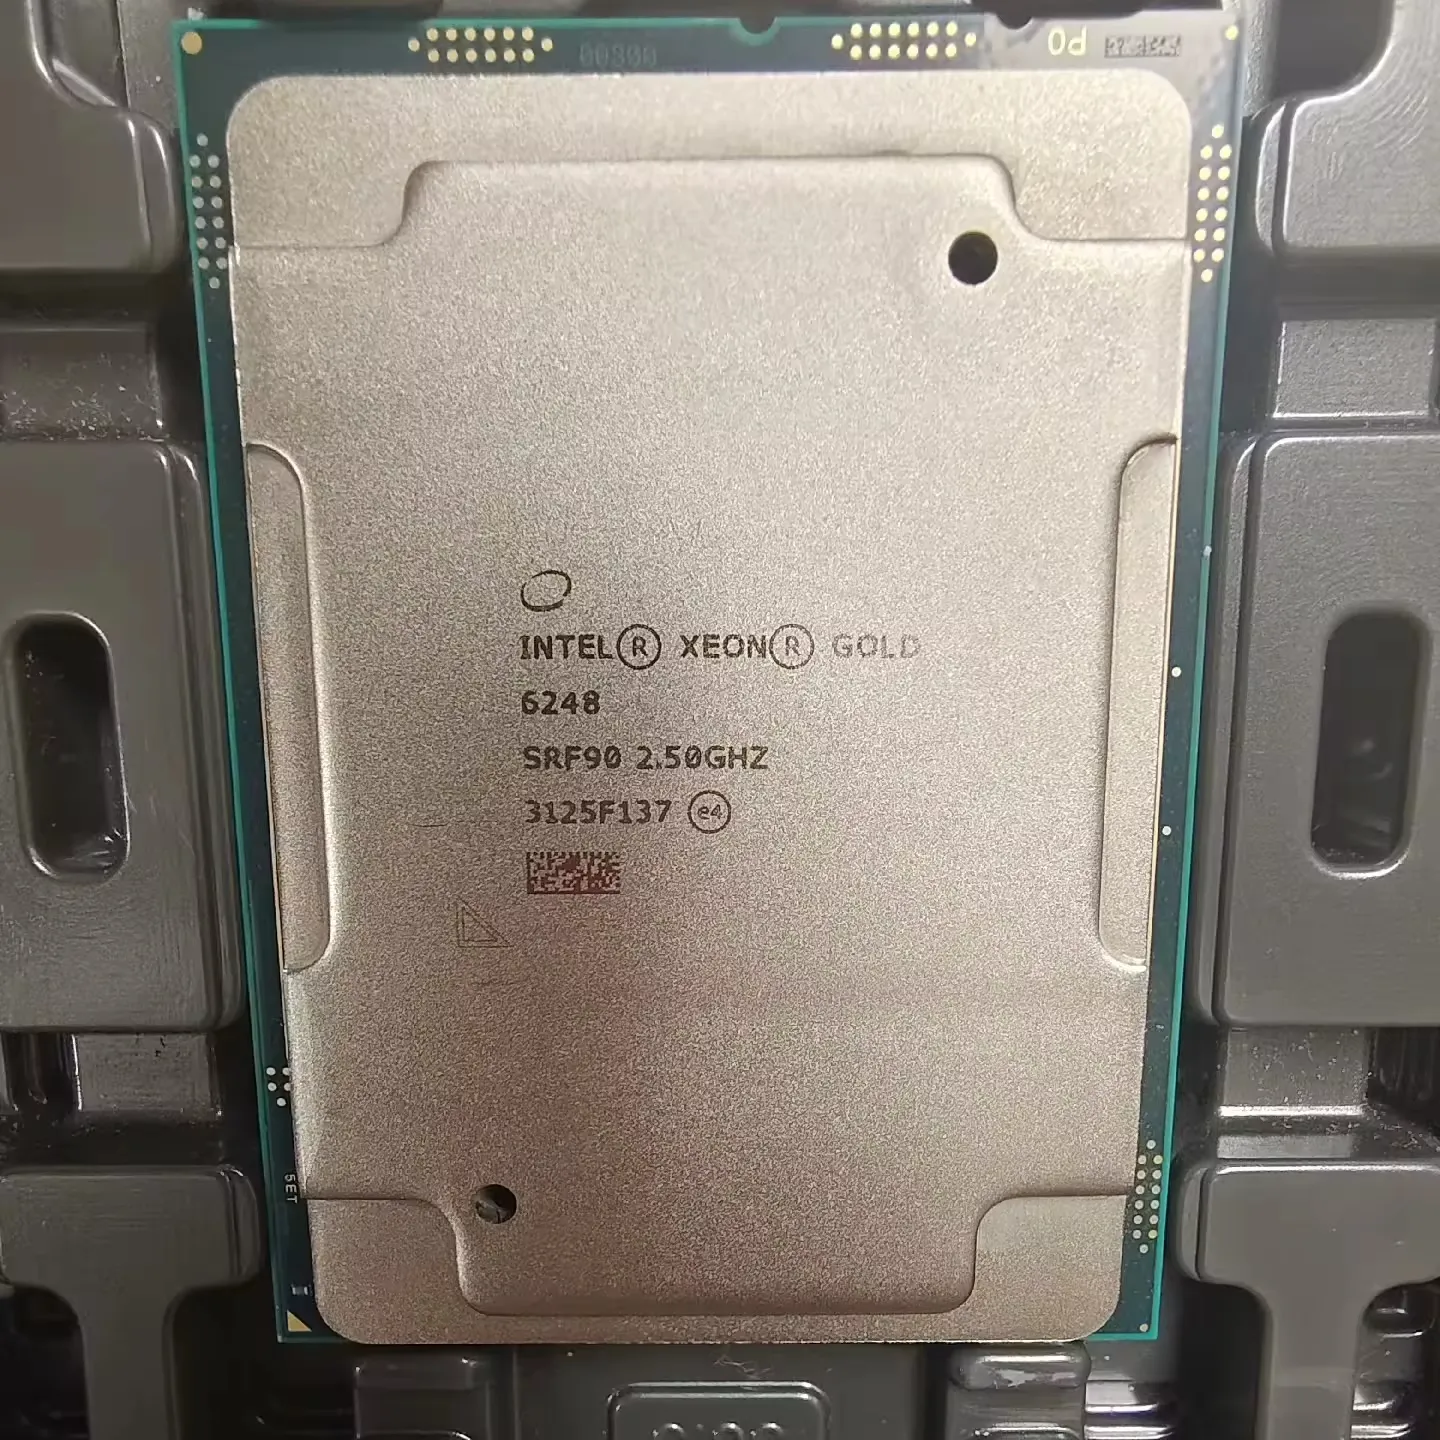 Intel XEON CPU Gen2 Gold 6248 2.5GHz 20core 27.5M 150W LGA3647 CPU